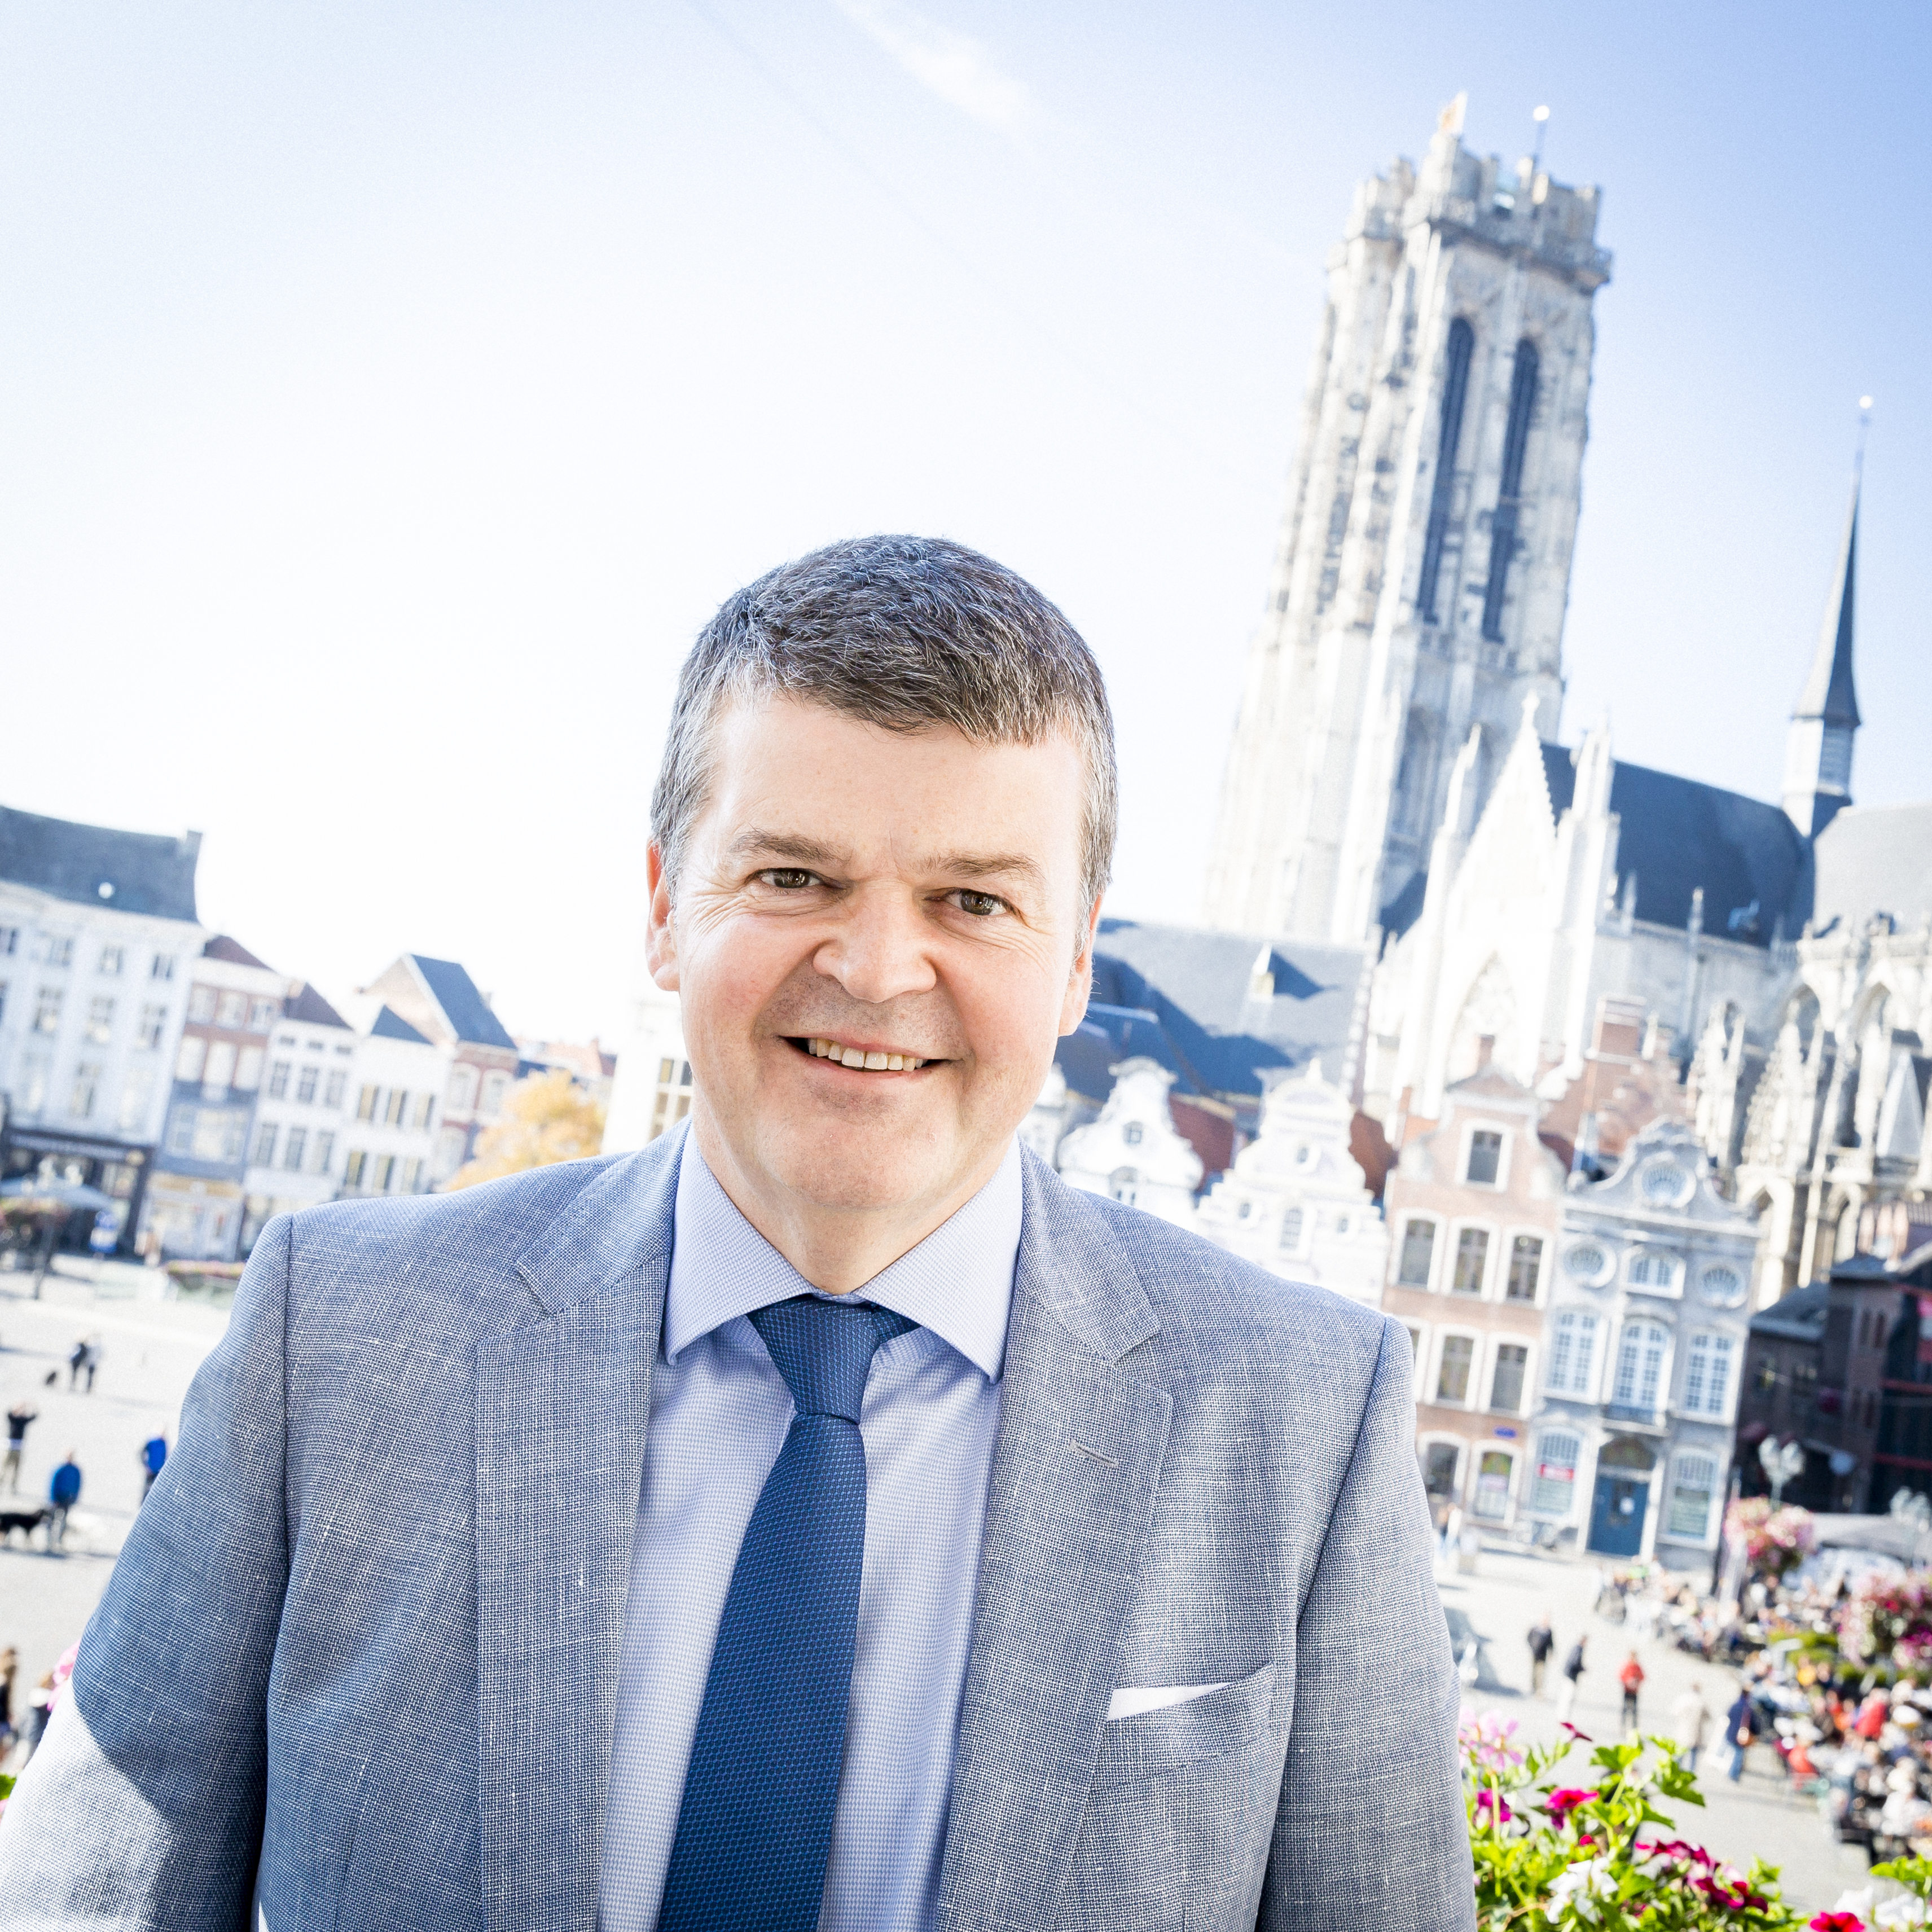 Bart Somers becomes Flemish Minister for Integration